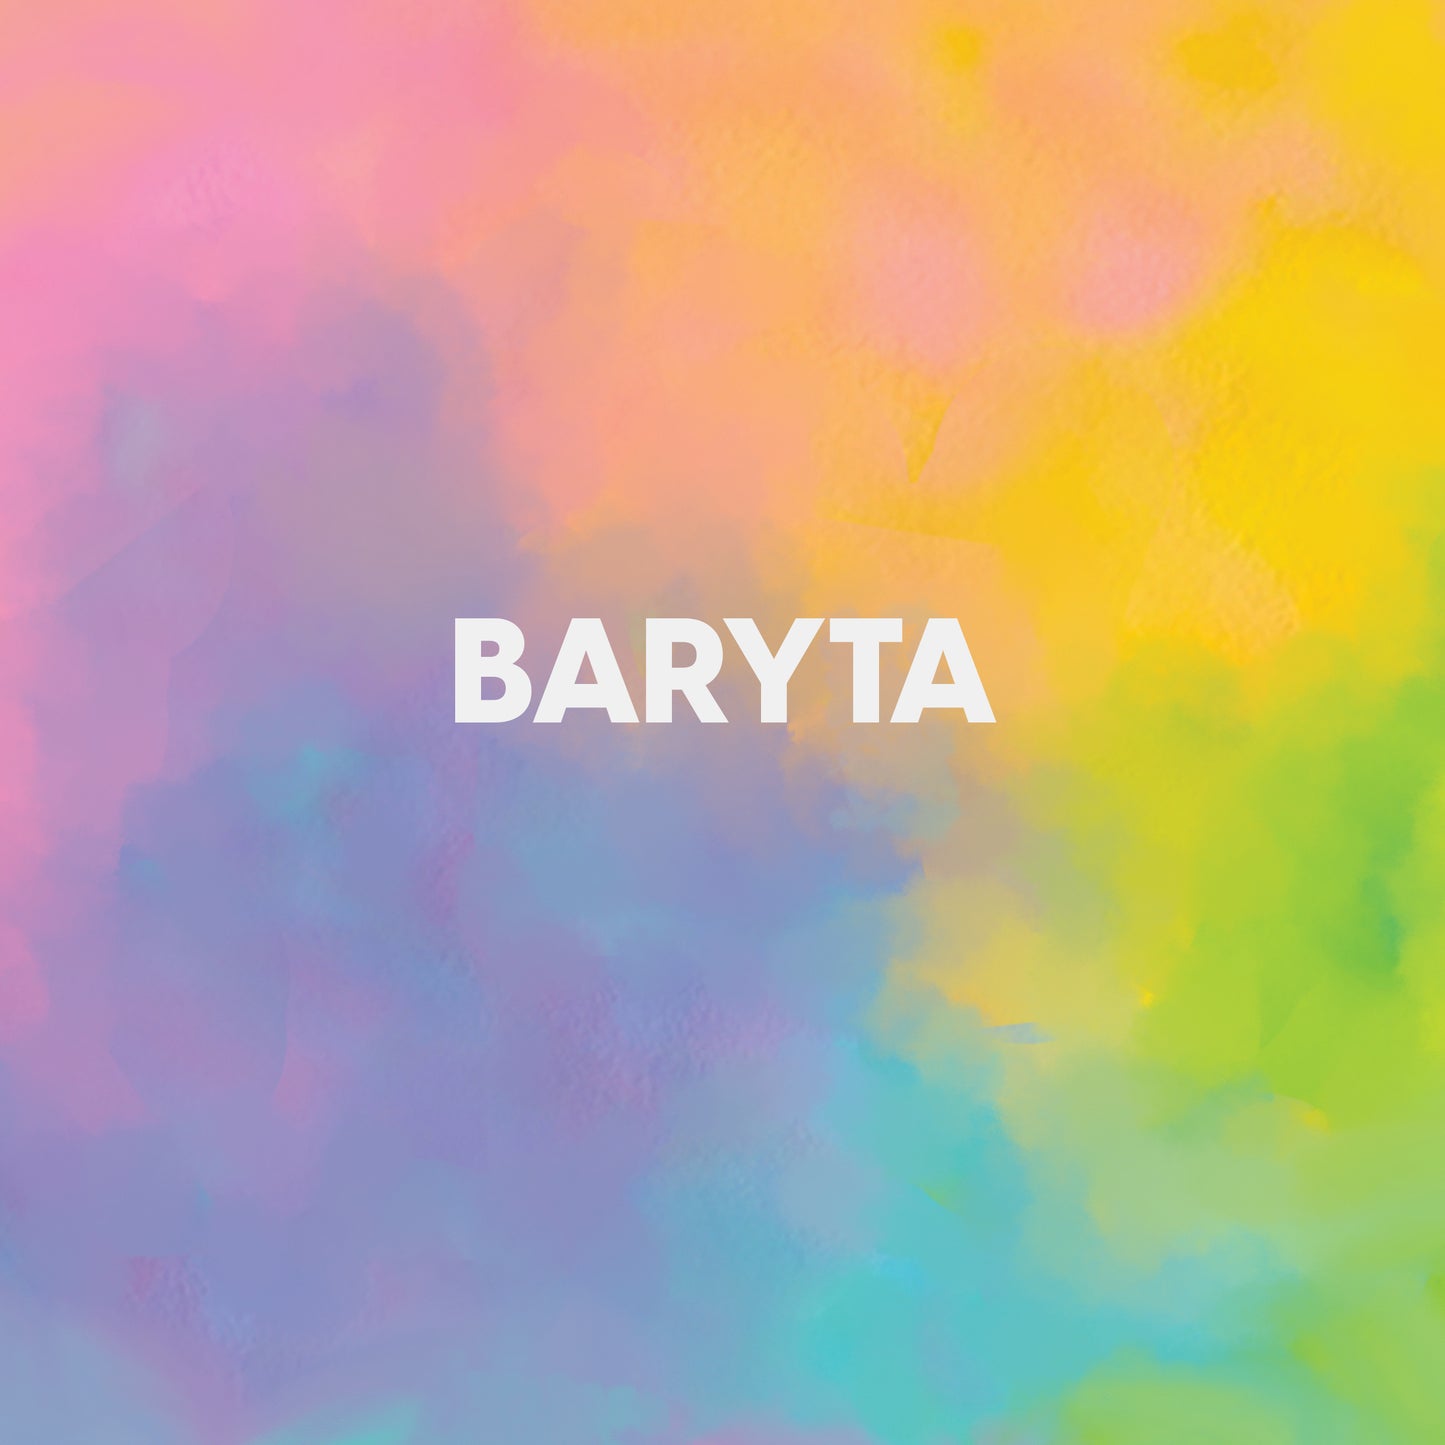 Archival Prints on BARYTA - by K. A. Artist Shop Services - K. A. Artist Shop